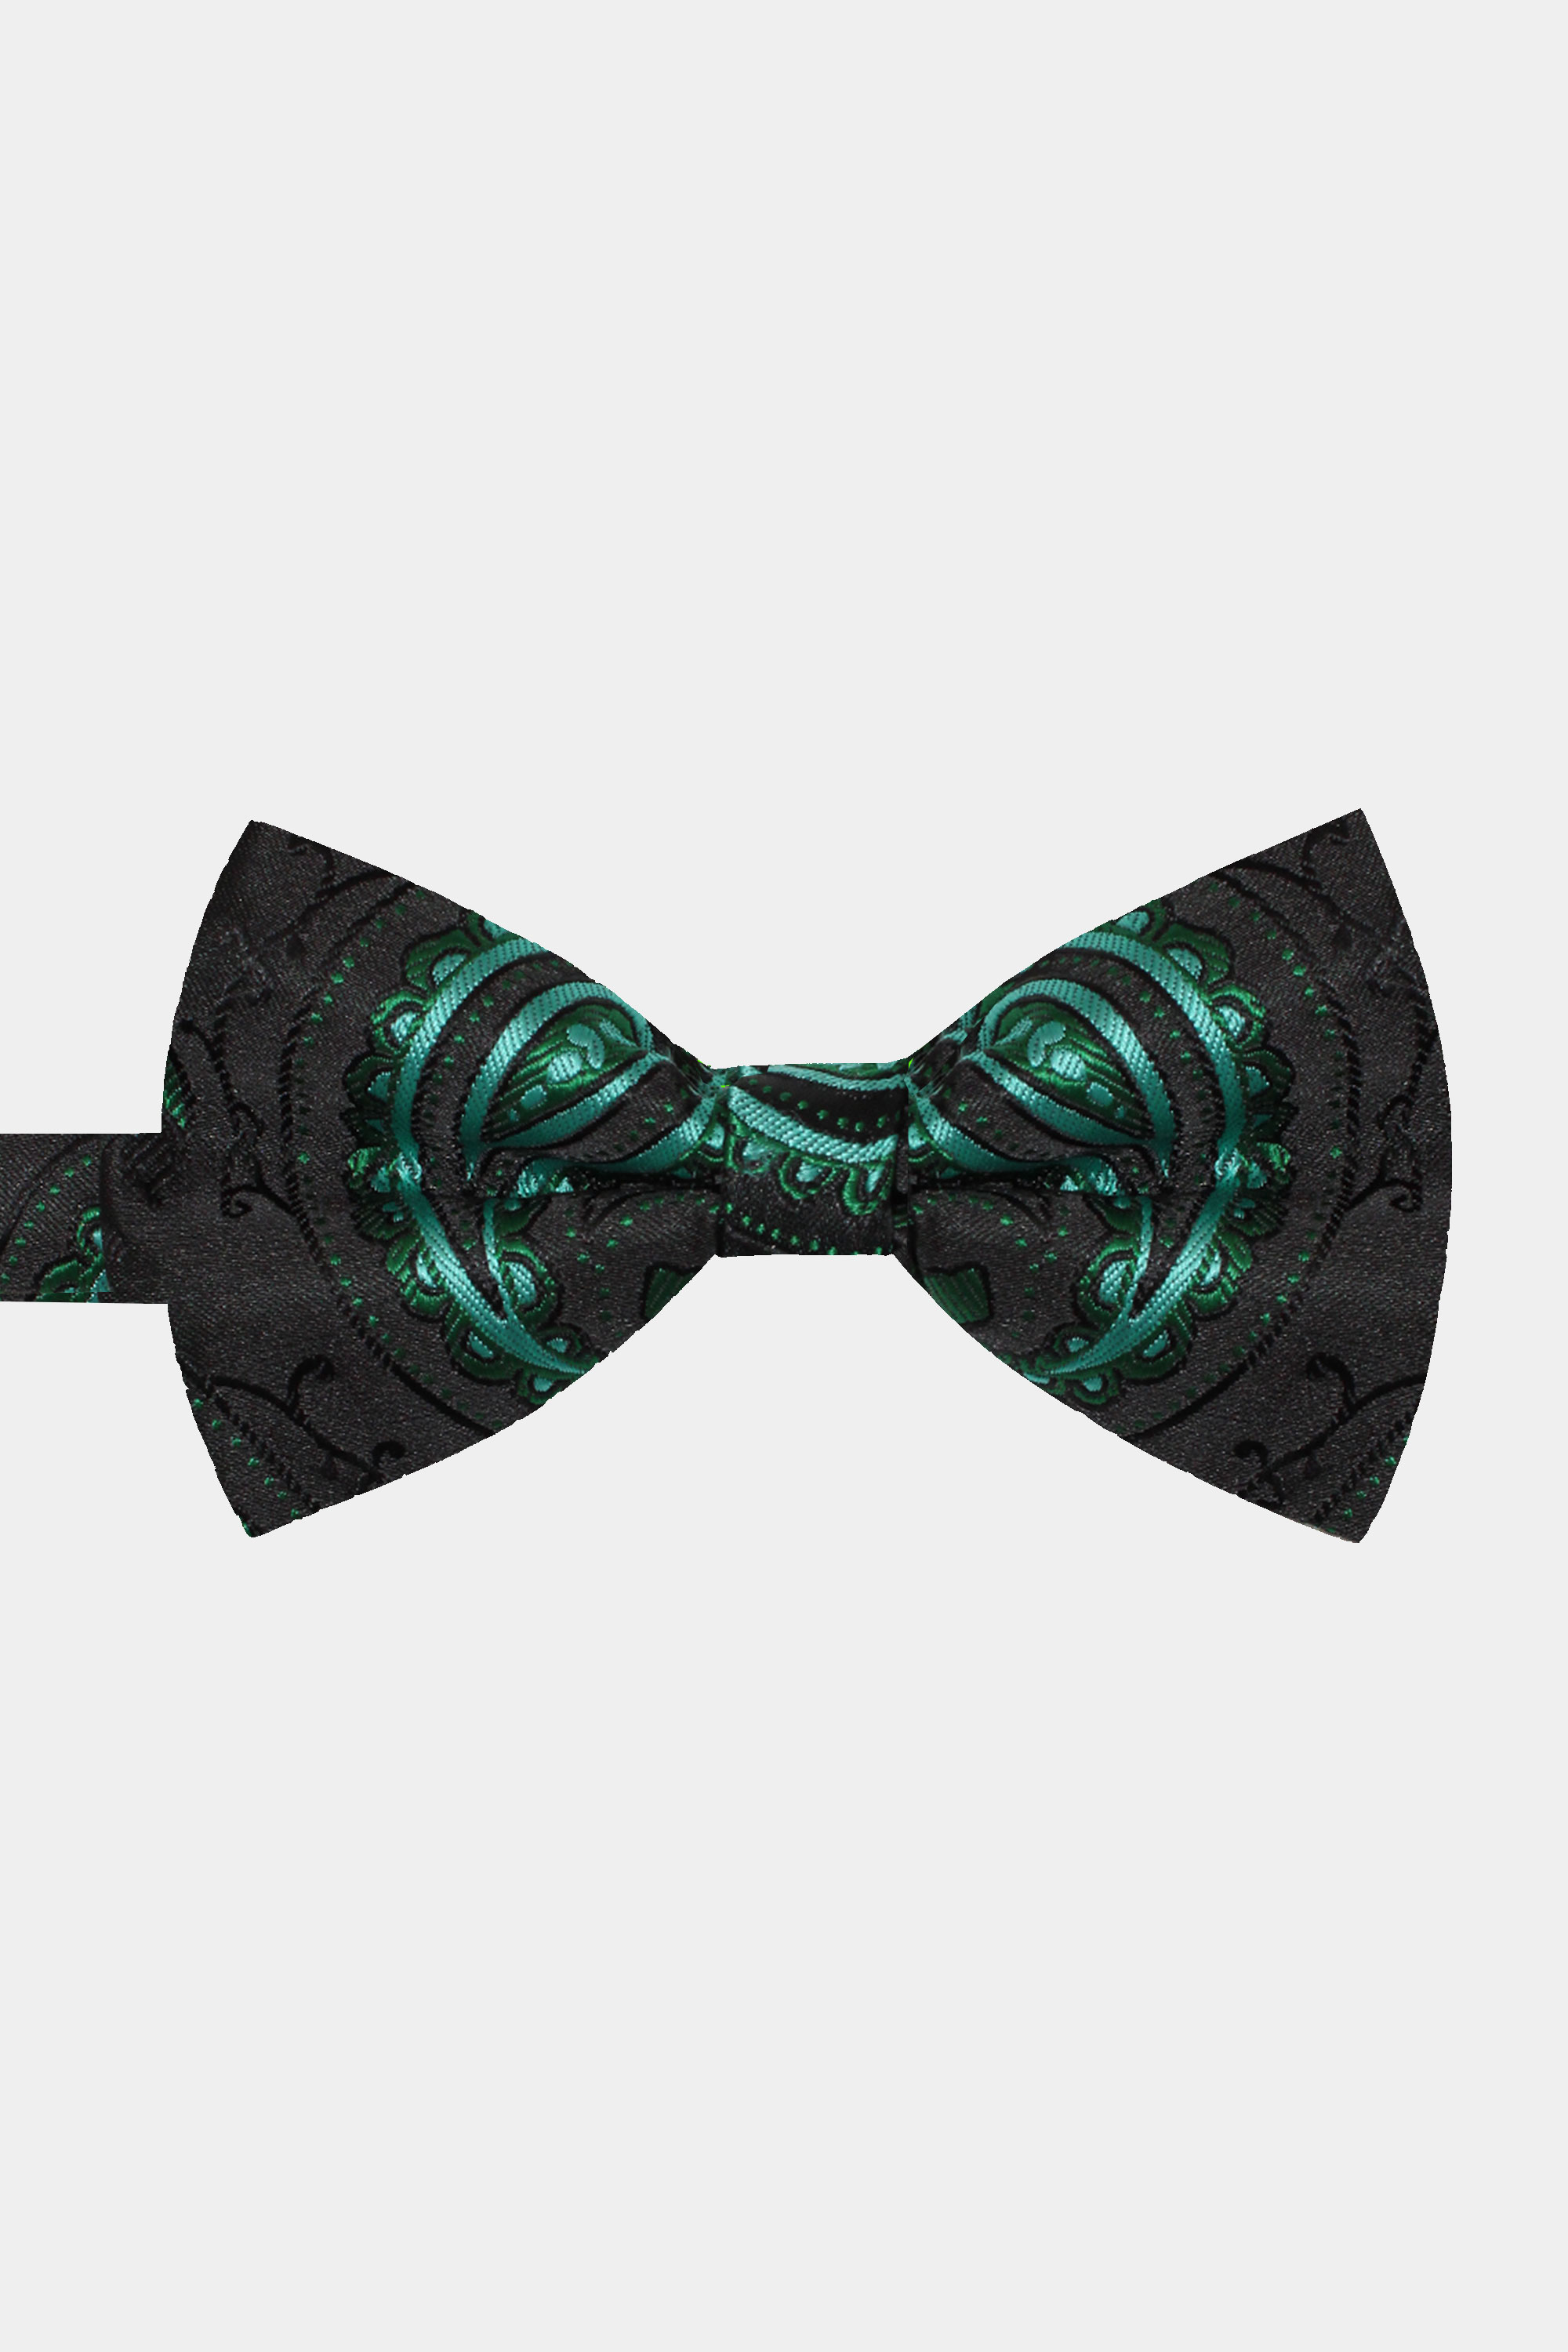 Paisley-Black-and-Green-Bow-Tie-from-Gentlemansguru.com